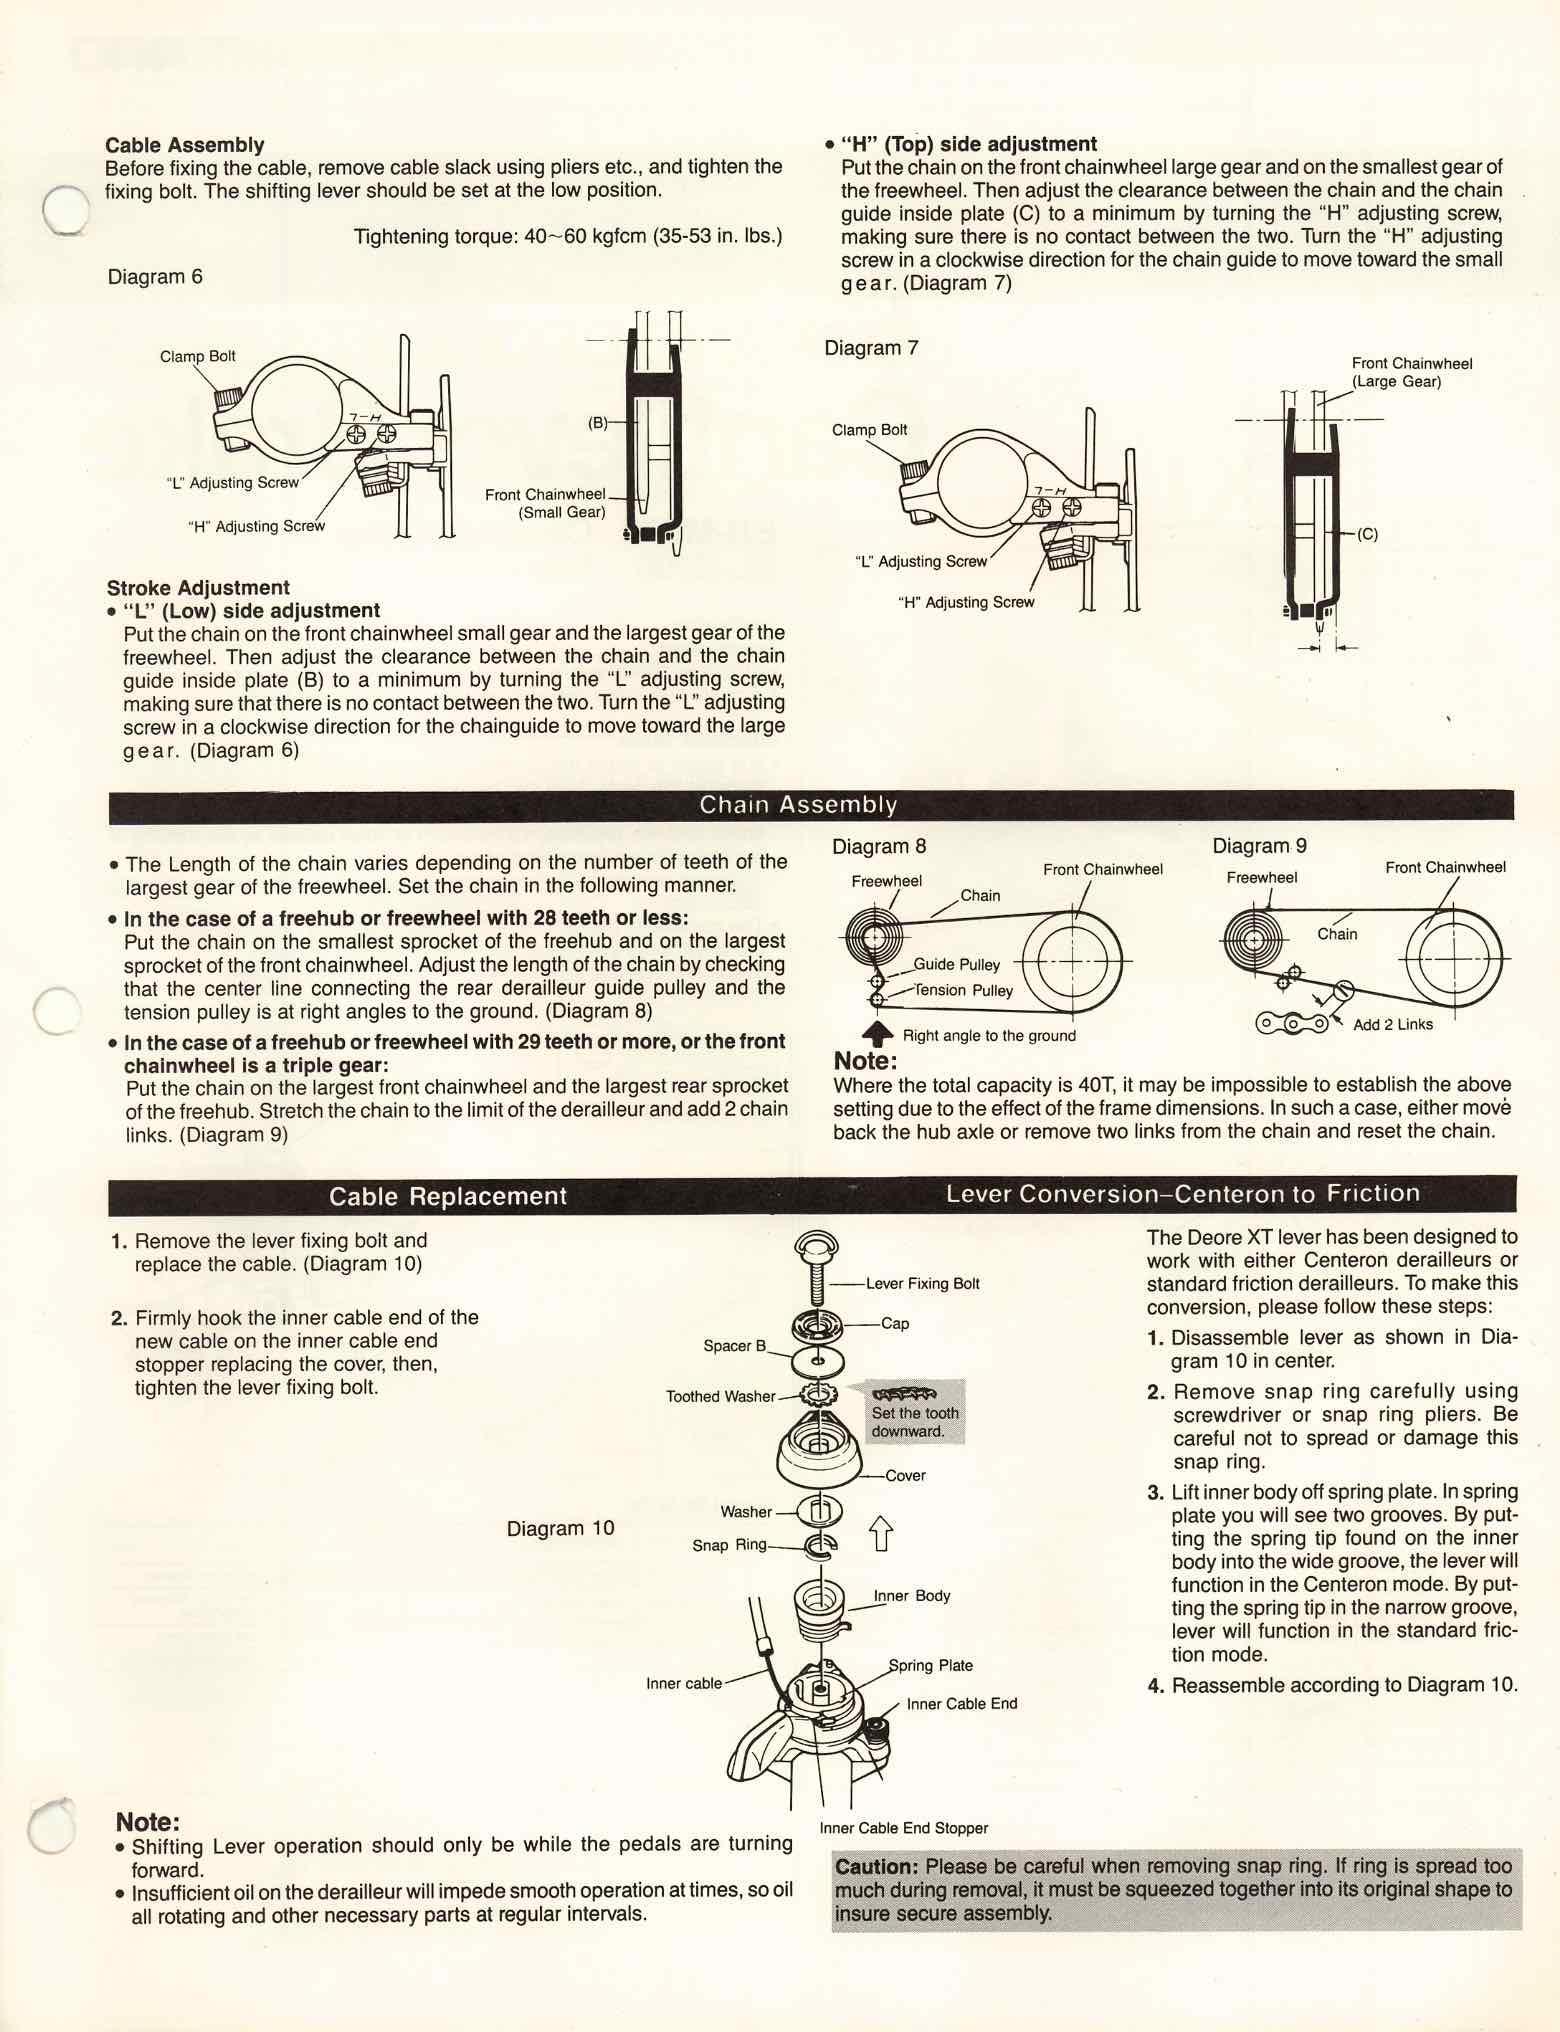 Shimano Technical Information - Deore XT 1983 scan 3 main image